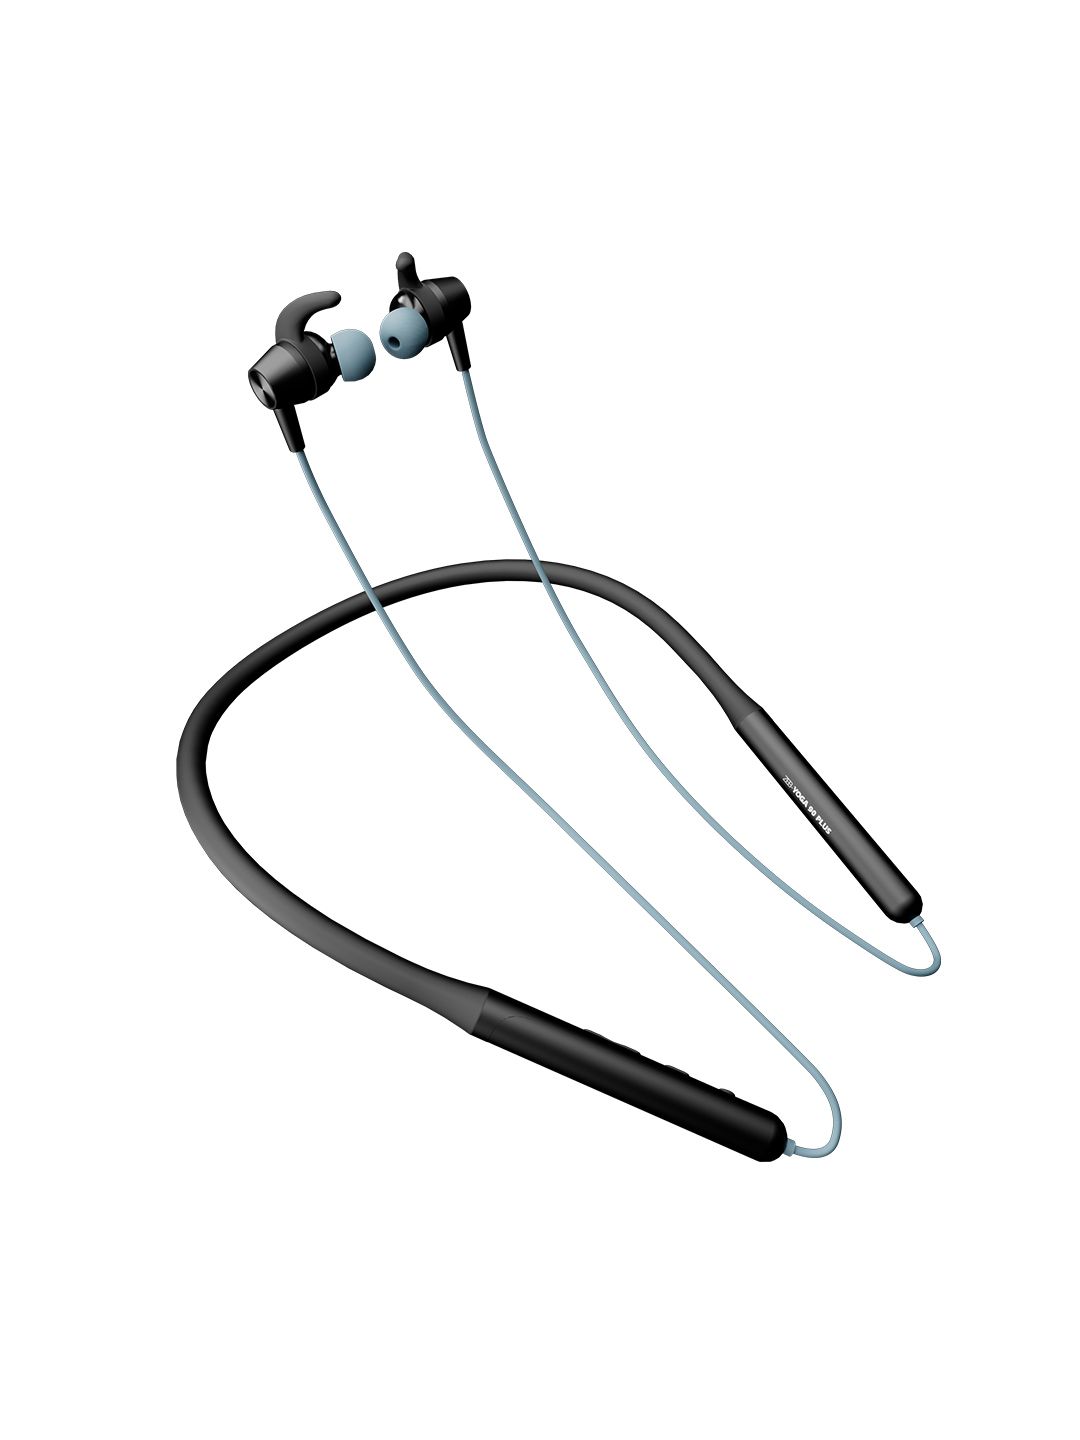 ZEBRONICS Zeb Yoga 90 Plus Wireless in-Ear Neckband Earphone Supporting Bluetooth - Green Price in India